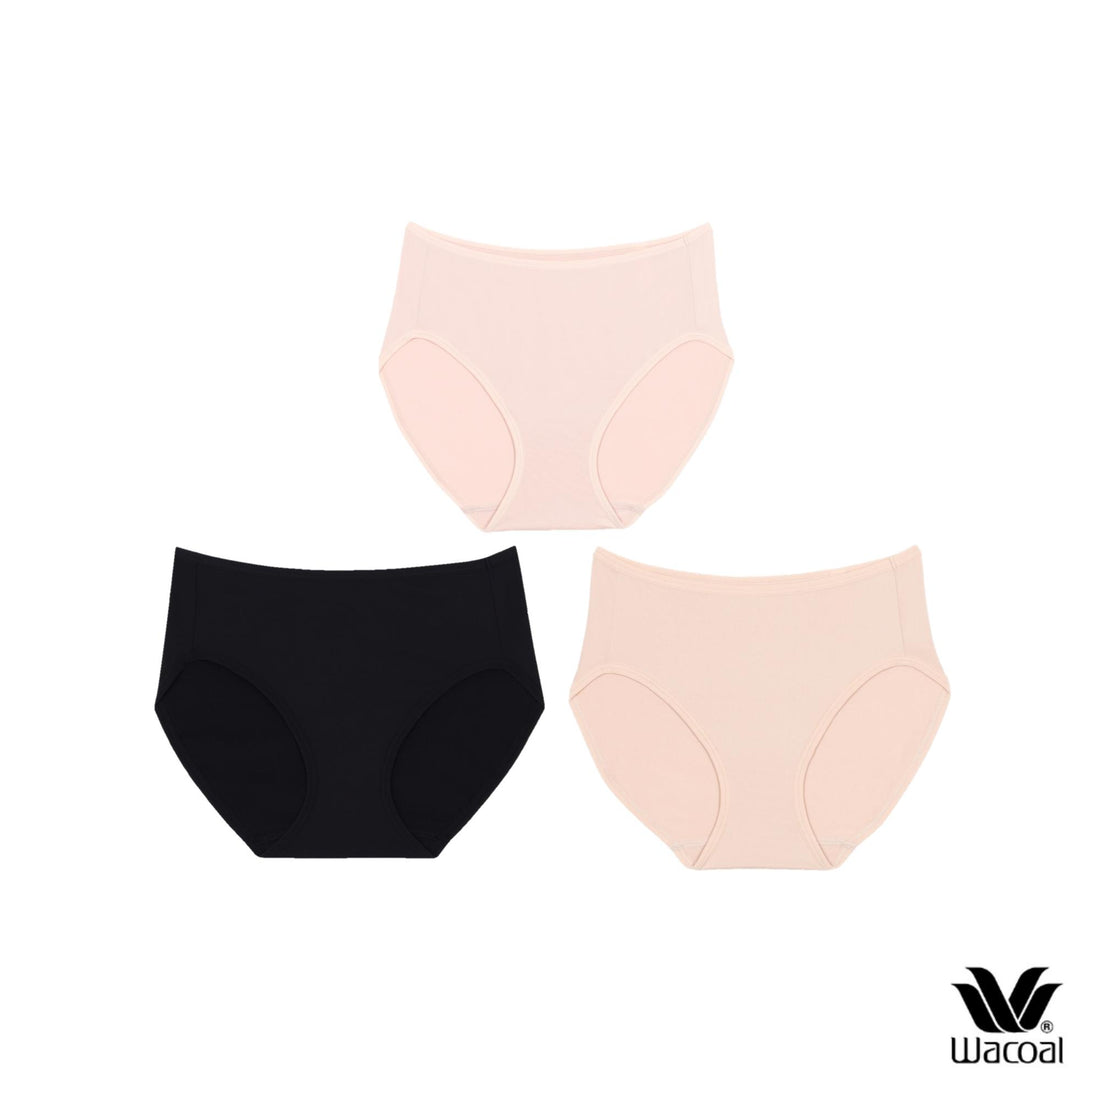 Wacoal Half Panty, half-shaped underwear, 1 Set of 3 pieces, model WU3287 (buy 1 set get 1 set free)